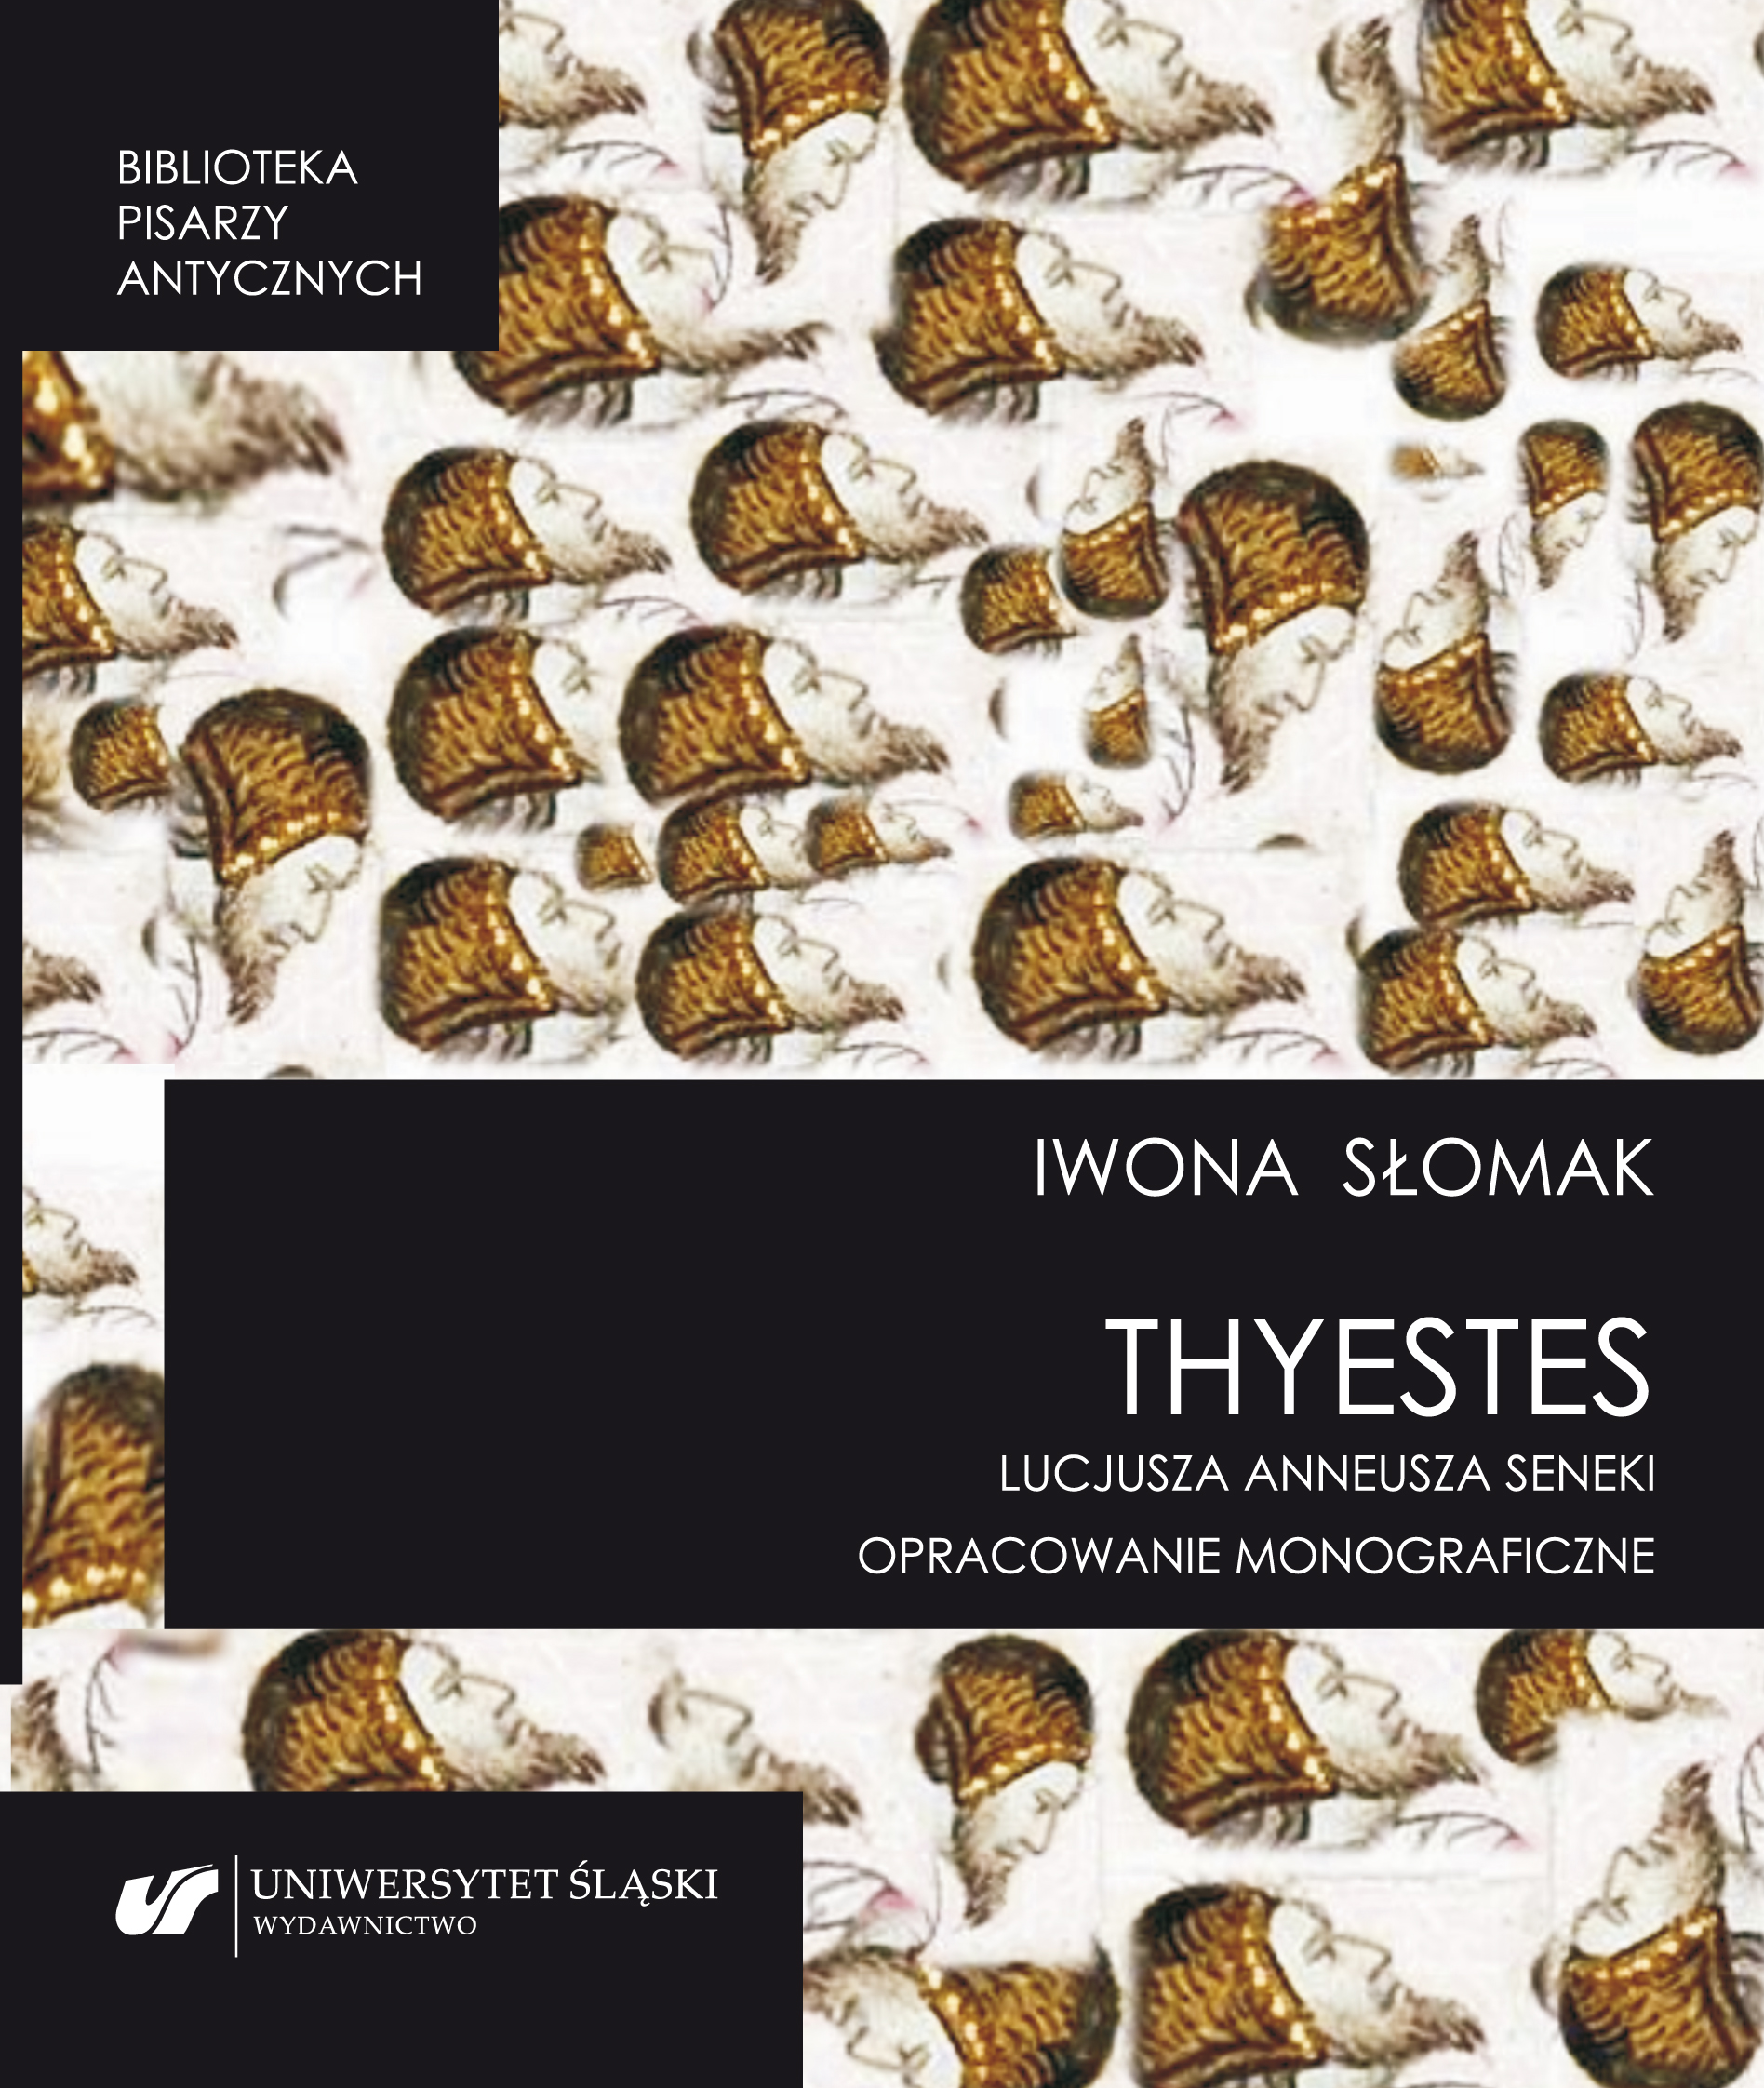 "Thyestes" by Lucius Annaeus Seneca. Monograph study